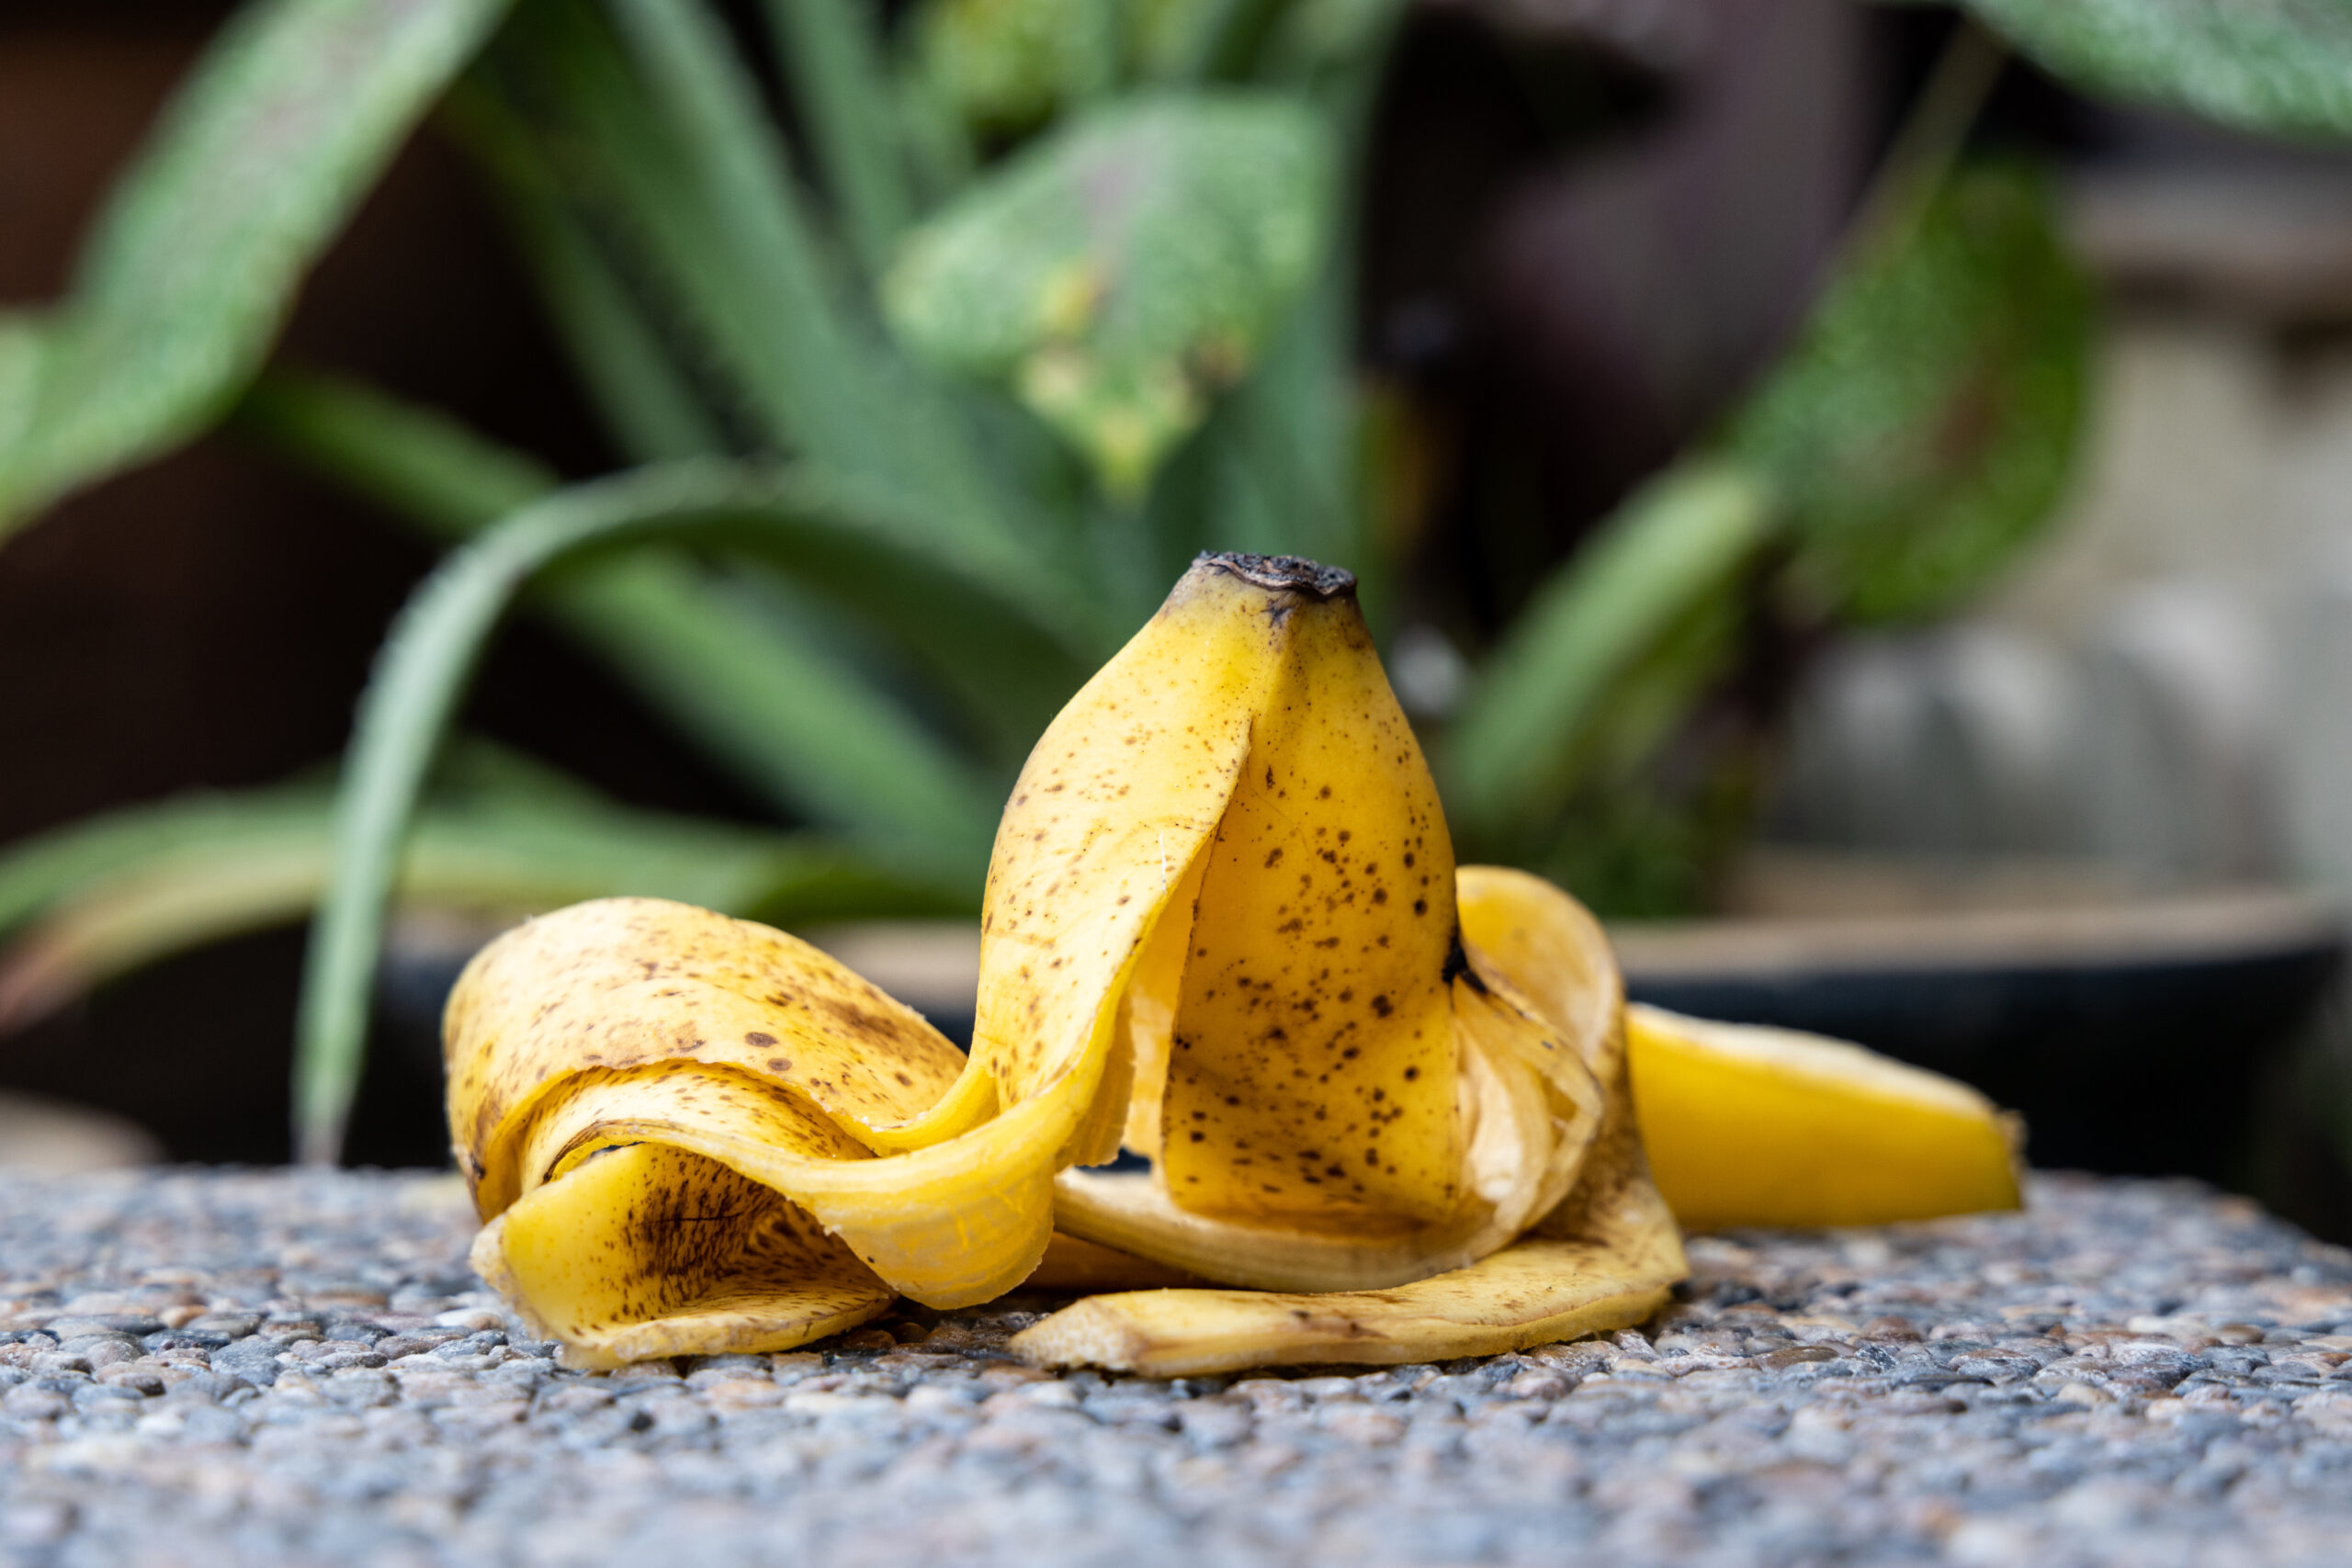 Banana peel against lush healthy plants in gardening background. Good source of organic fertilizer high in potassium